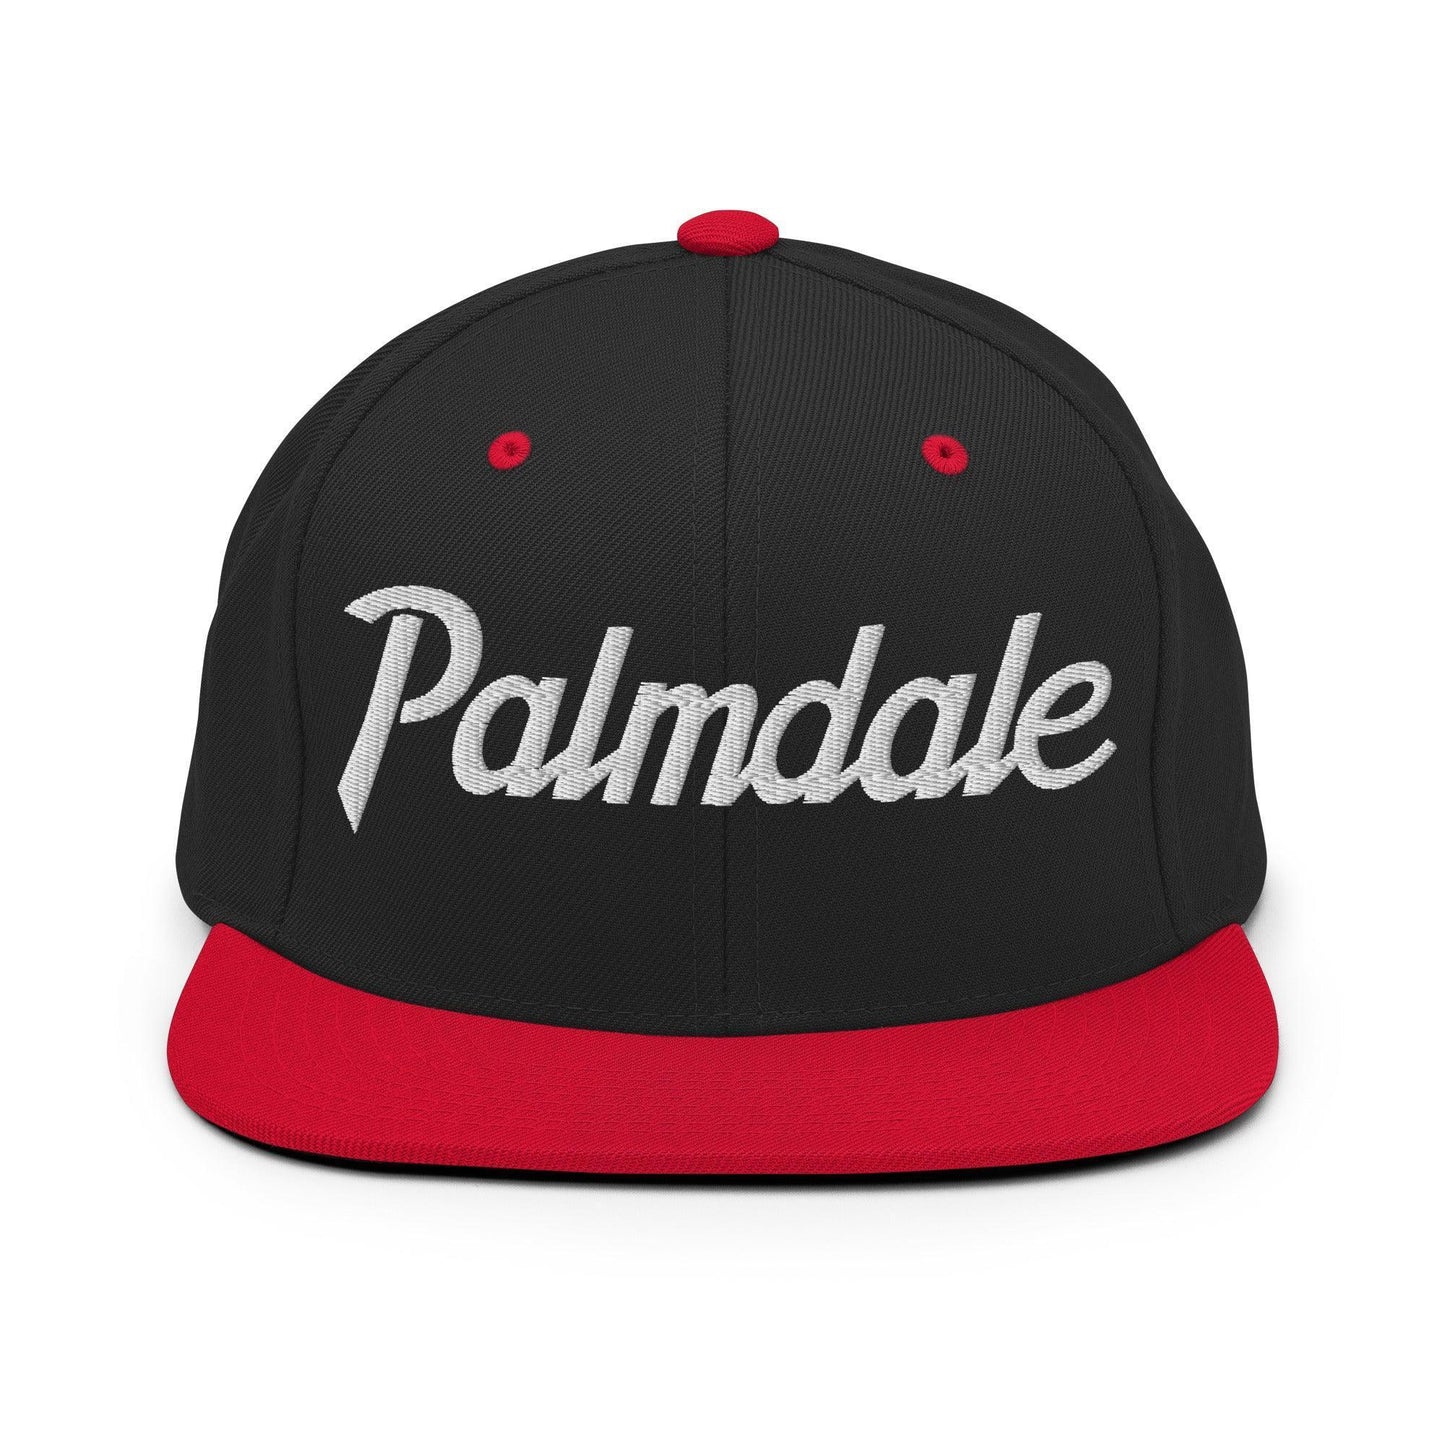 Palmdale Script Snapback Hat Black Red